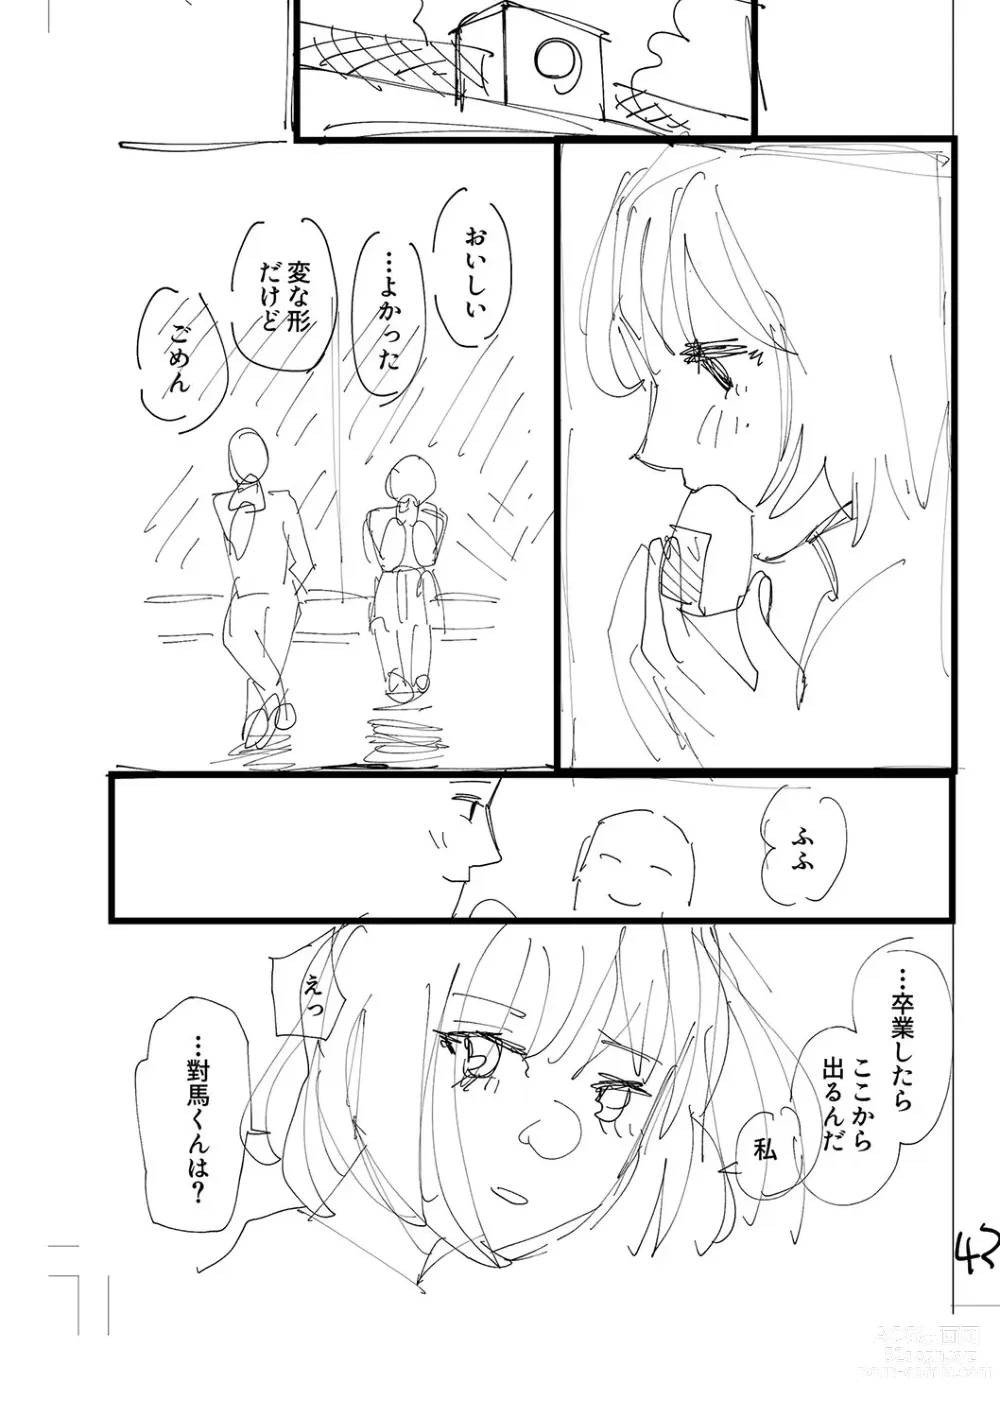 Page 256 of manga Oyasumi, Teen - Good Night, Goodbye